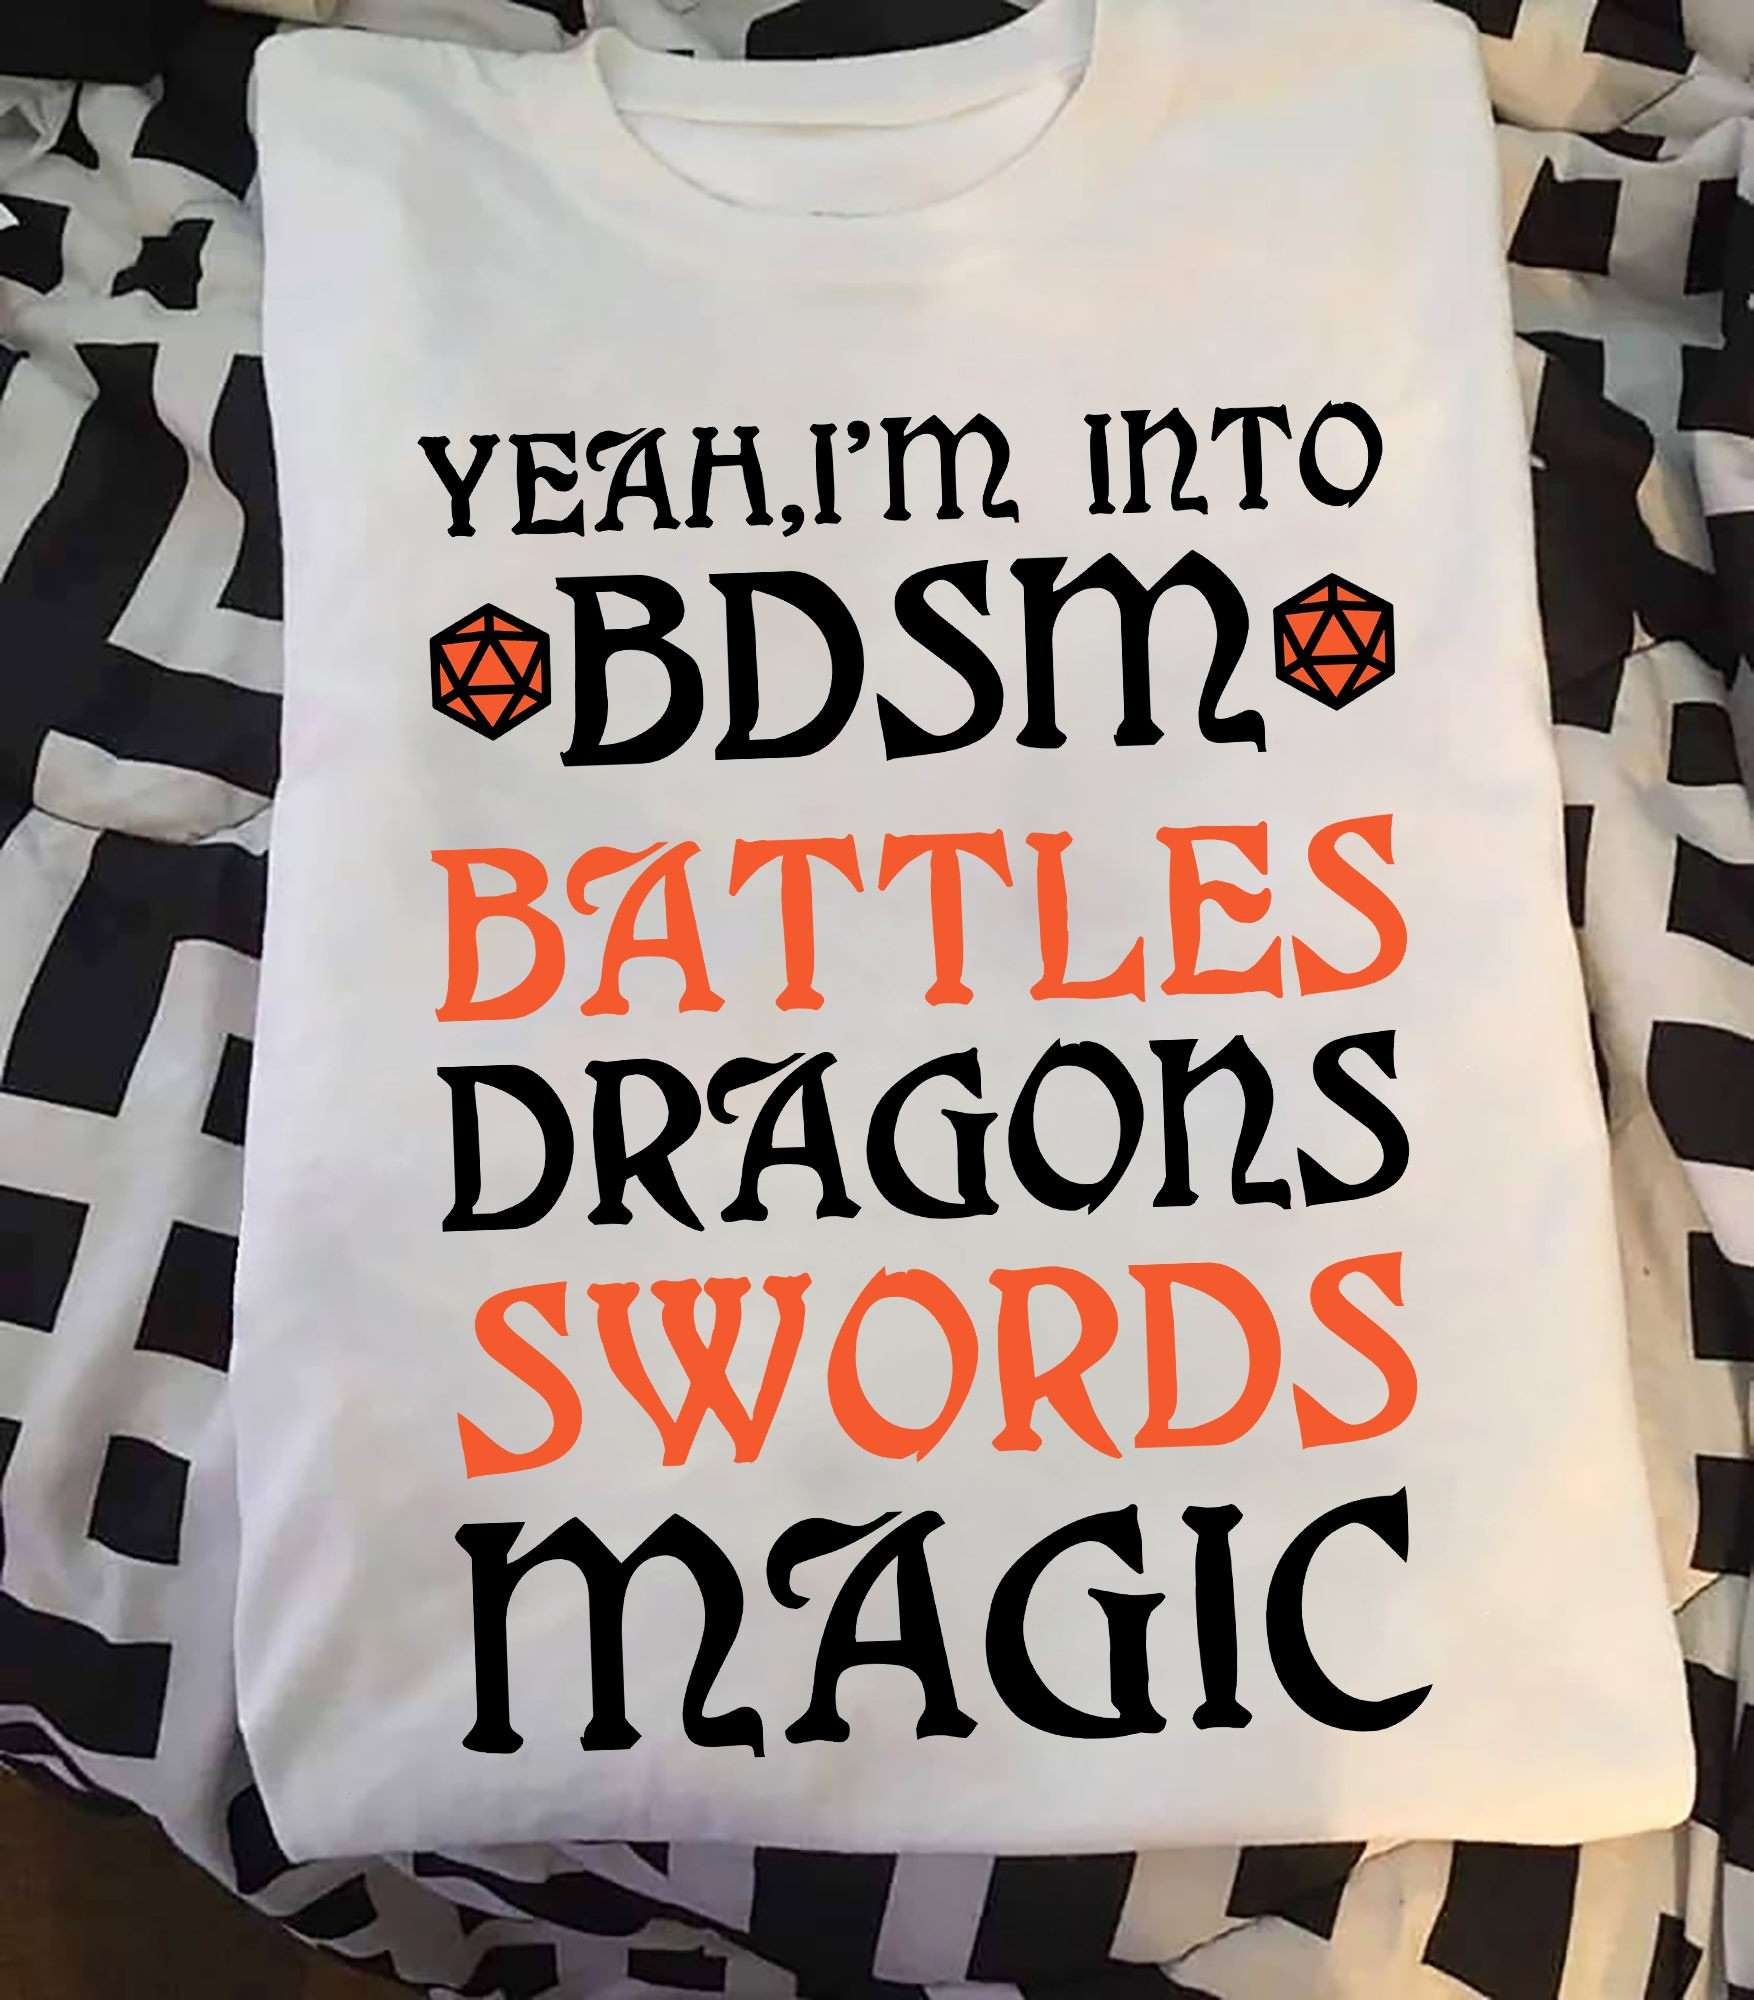 Yeah i'm into BDSM battles dragons swards magic